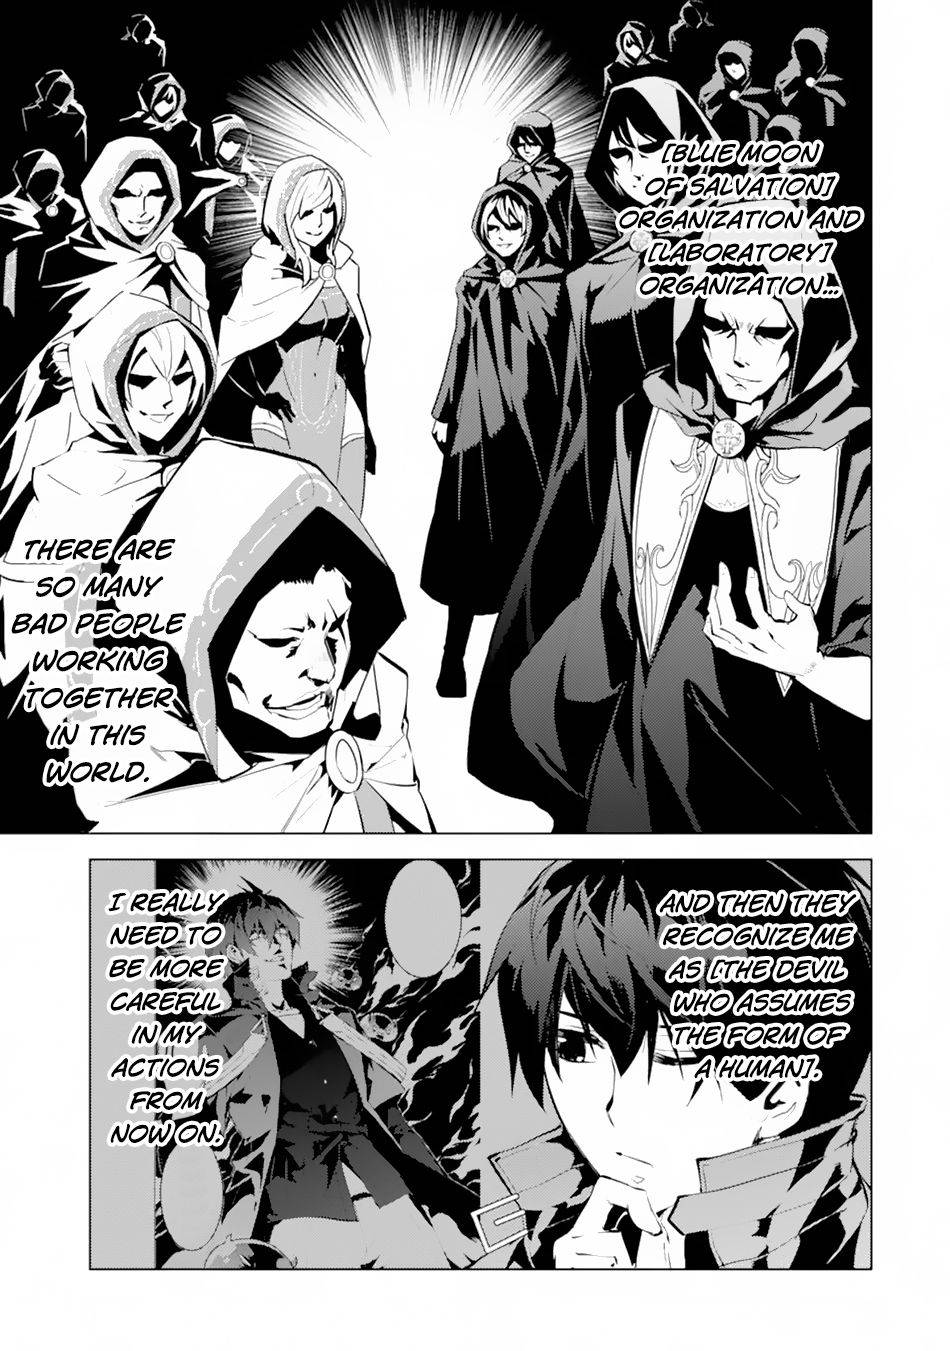 Manga Mogura RE on X: My Isekai Life: I Gained a Second Character Class &  Became the Strongest Sage in the World LN manga adaptation vol 18 by  Shinkou Shotou, Ponjea (Friendly